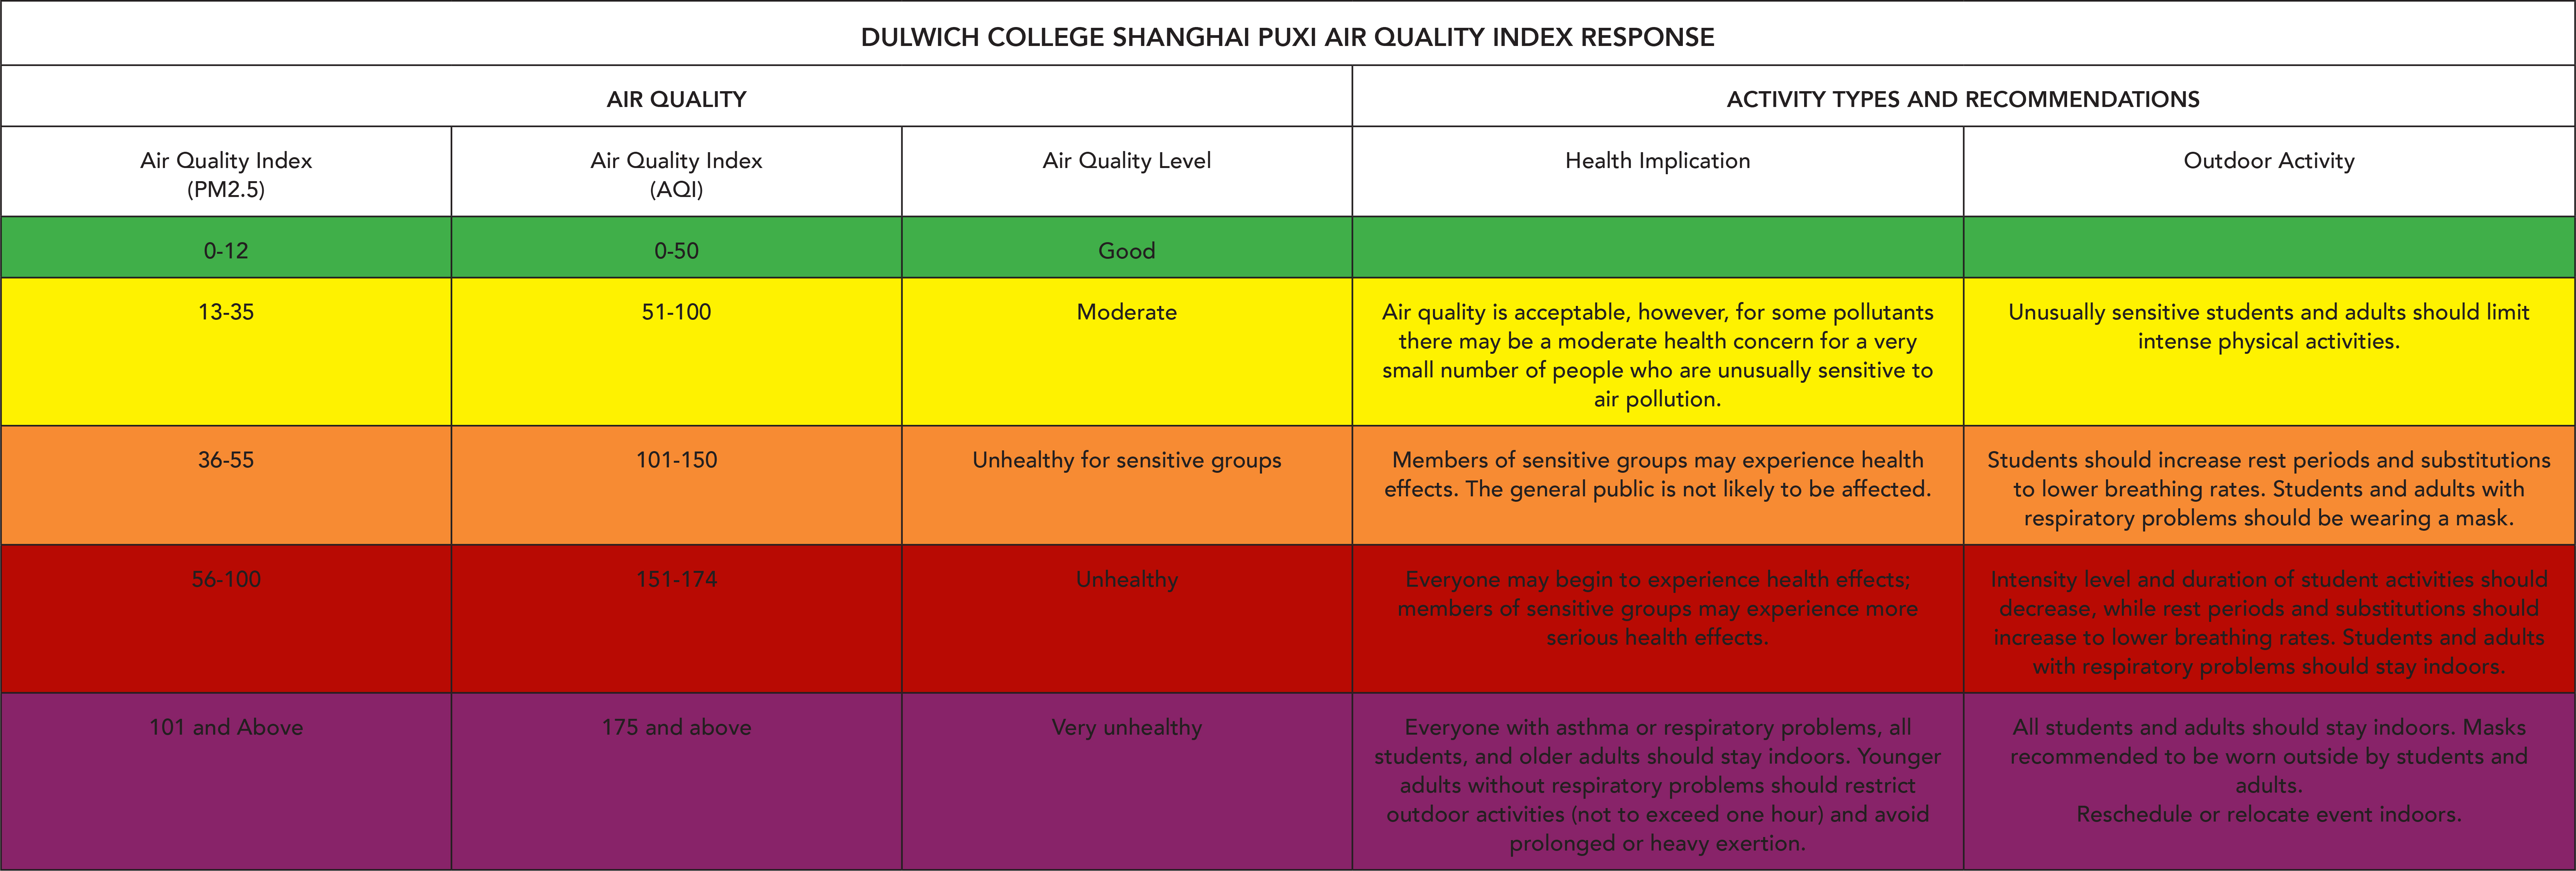 Dulwich College Shanghai Puxi AQI index table